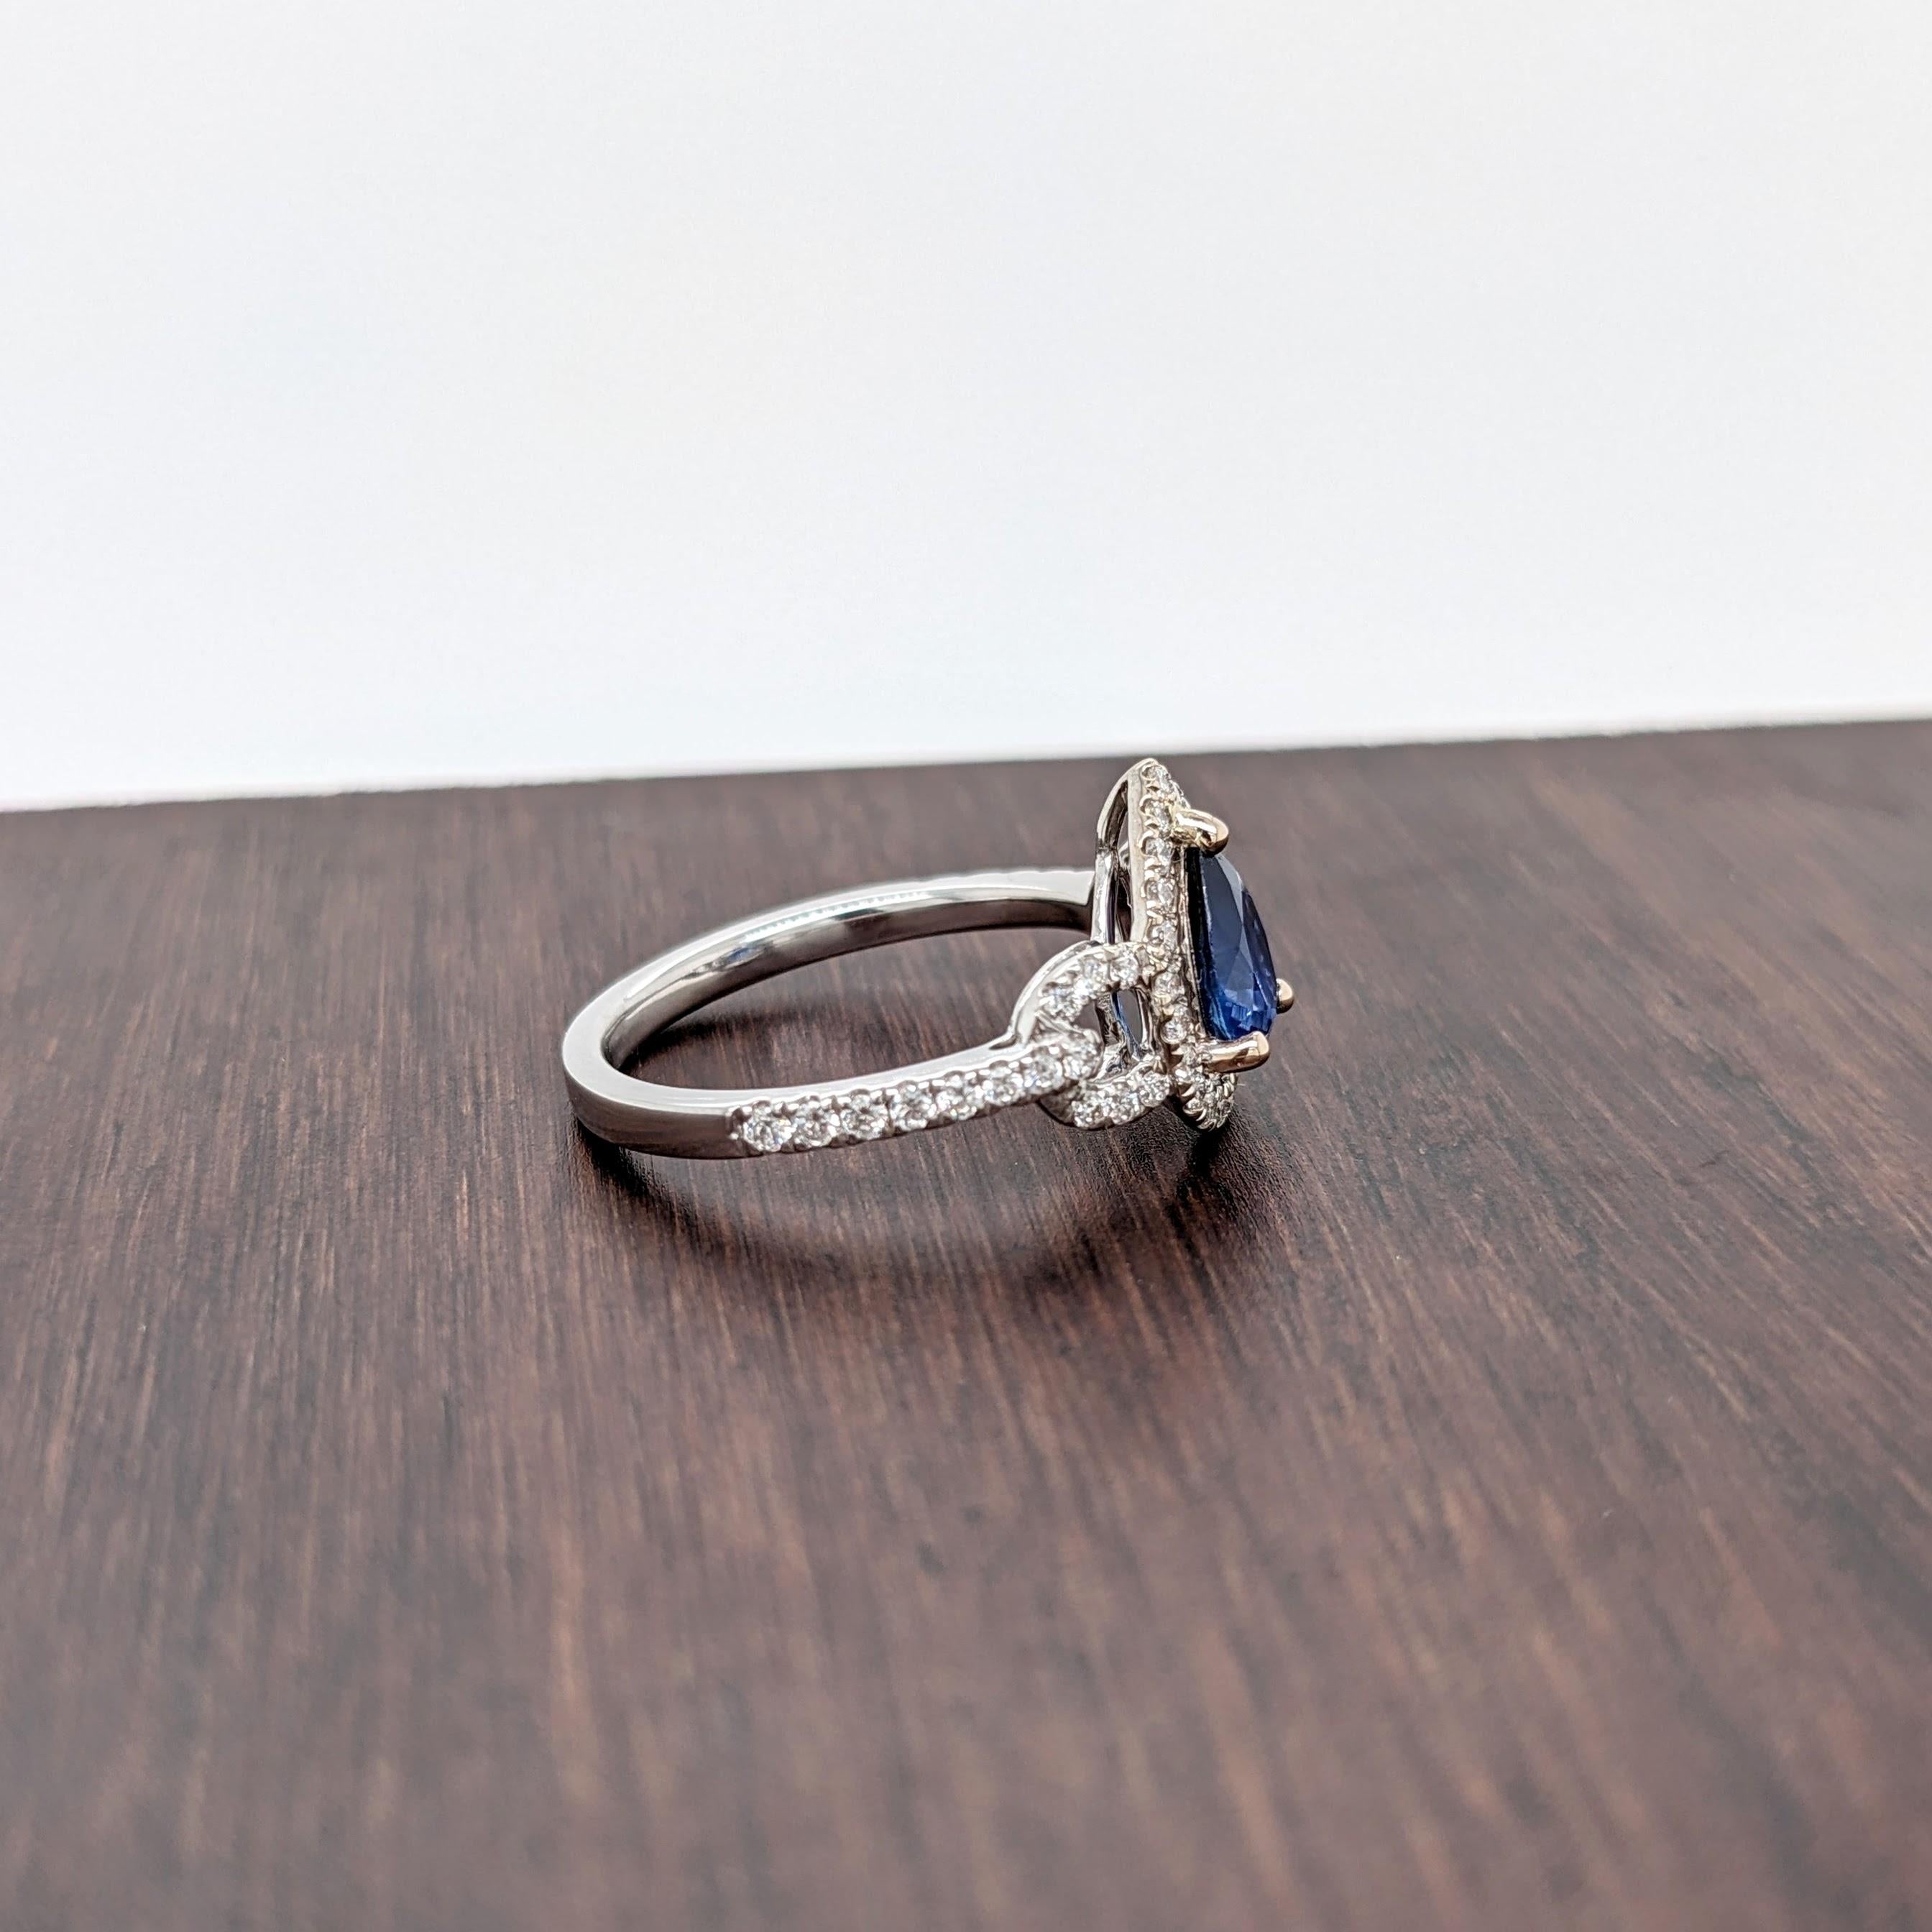 Pear Cut 1.14ct Ceylon Sapphire Ring w Diamond Halo in Solid 14k White Gold Pear 8x6mm